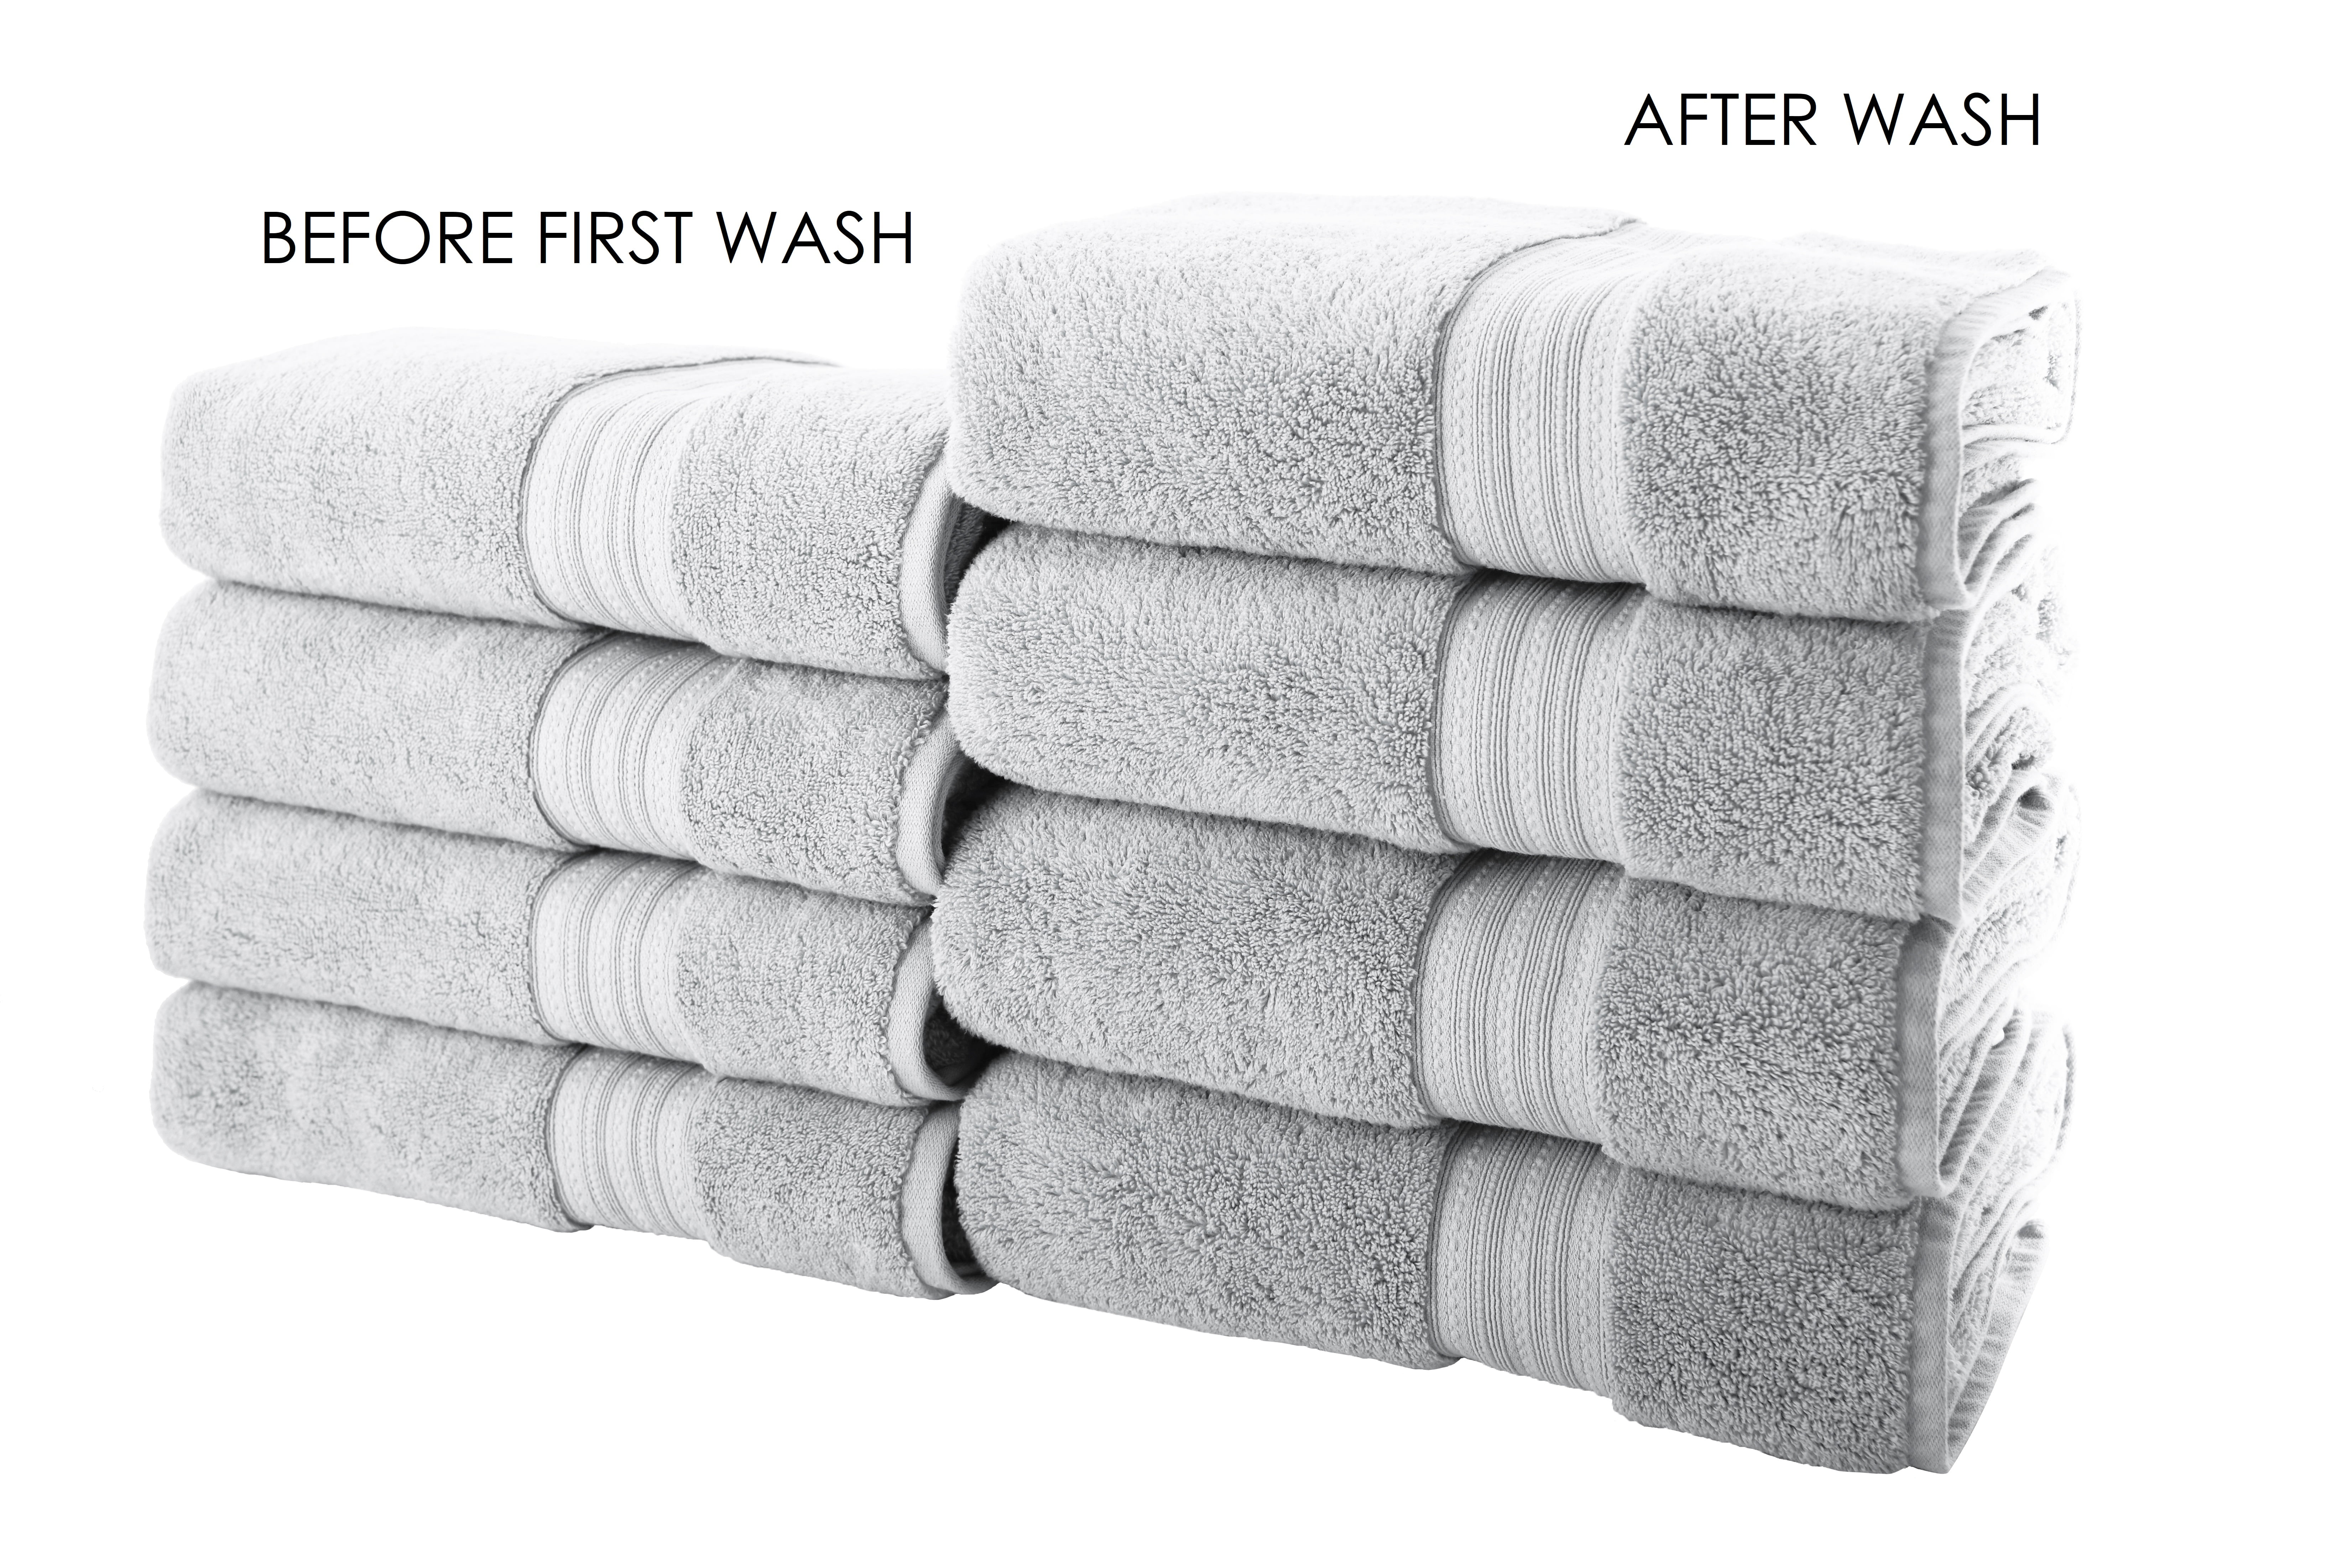 Bath Sheet vs. Bath Towel: Which Is Better?